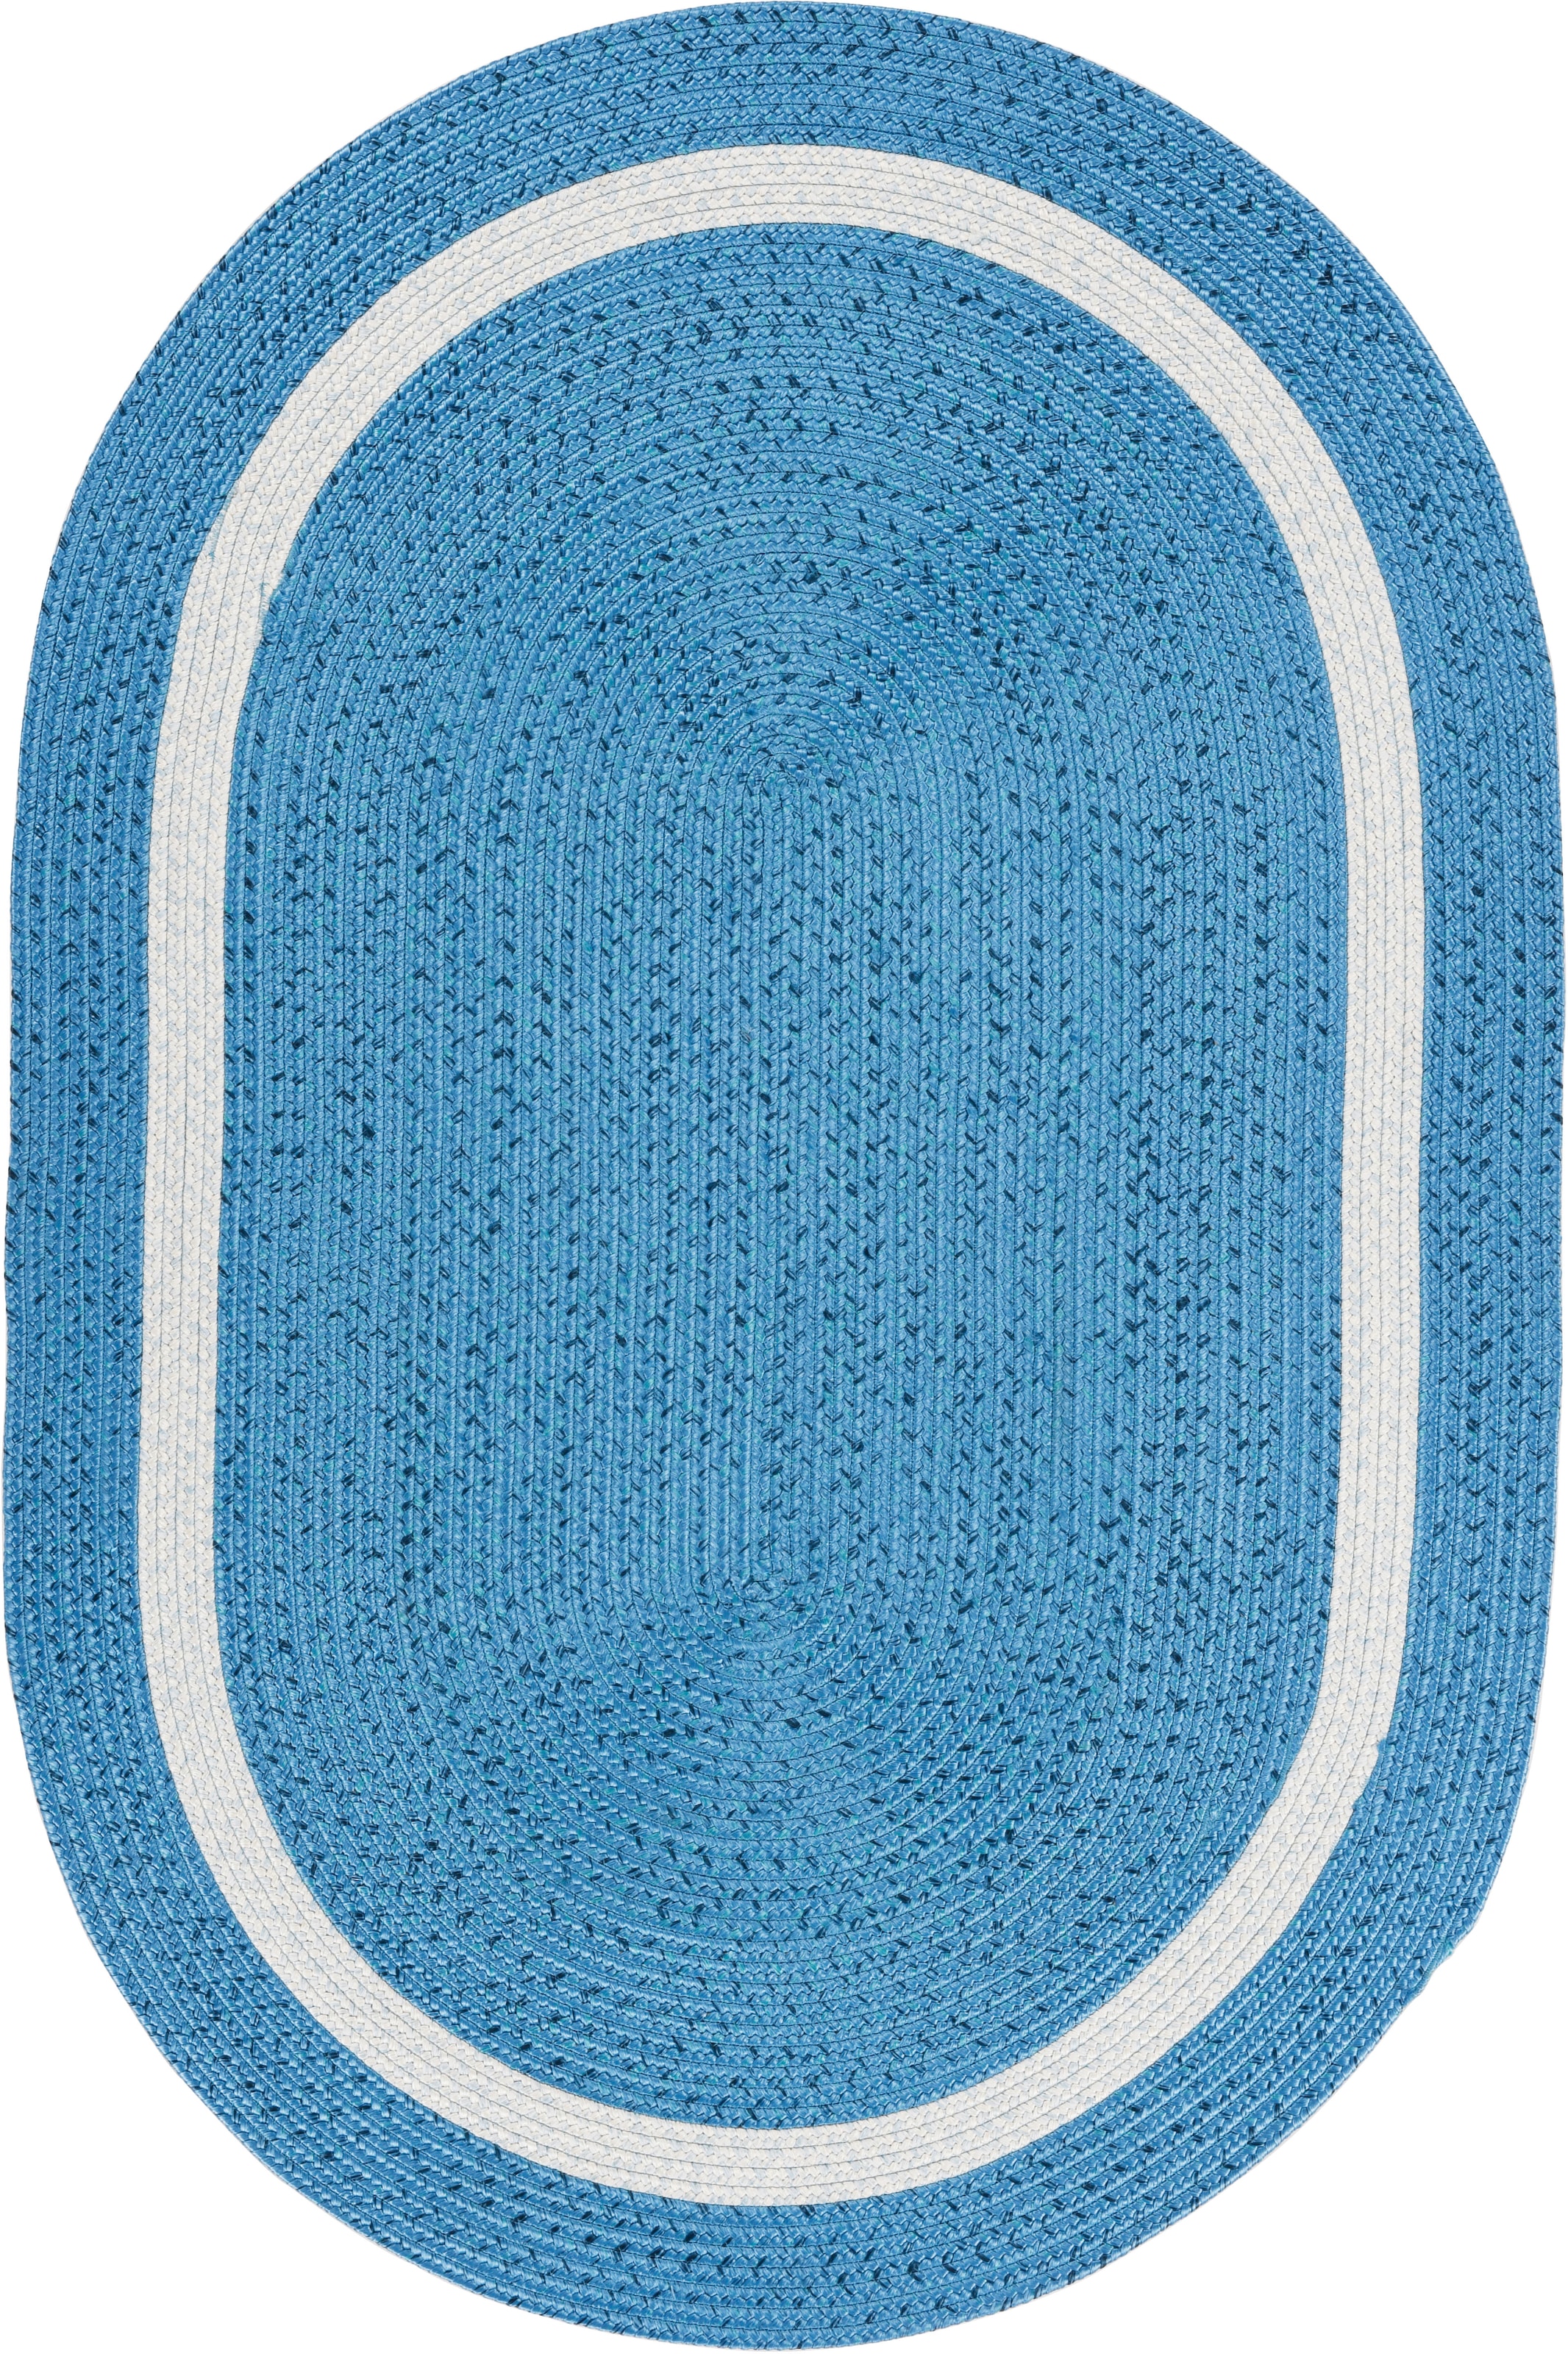 Gino Falcone Teppich »Benito«, oval, Flachgewebe, Uni-Farben, mit Bordüre, In- und Outdoor geeignet